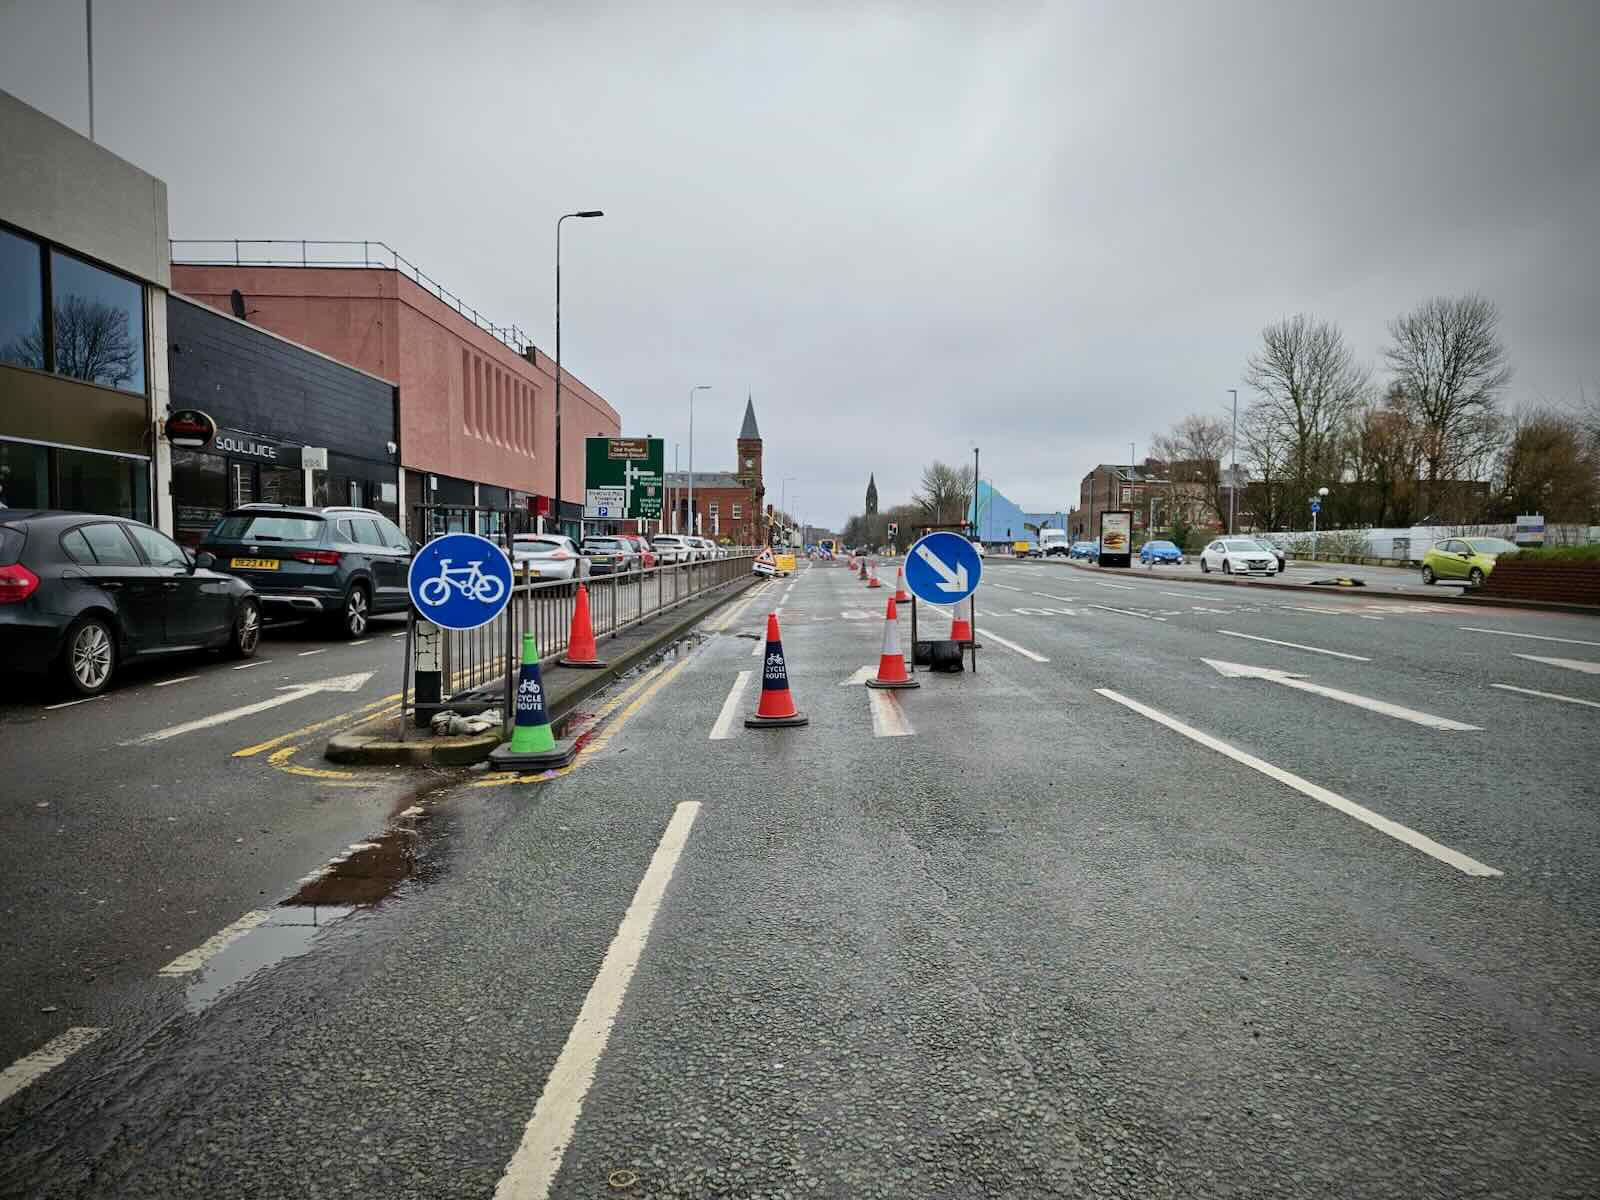 Cones restart approaching the Edge Lane junction